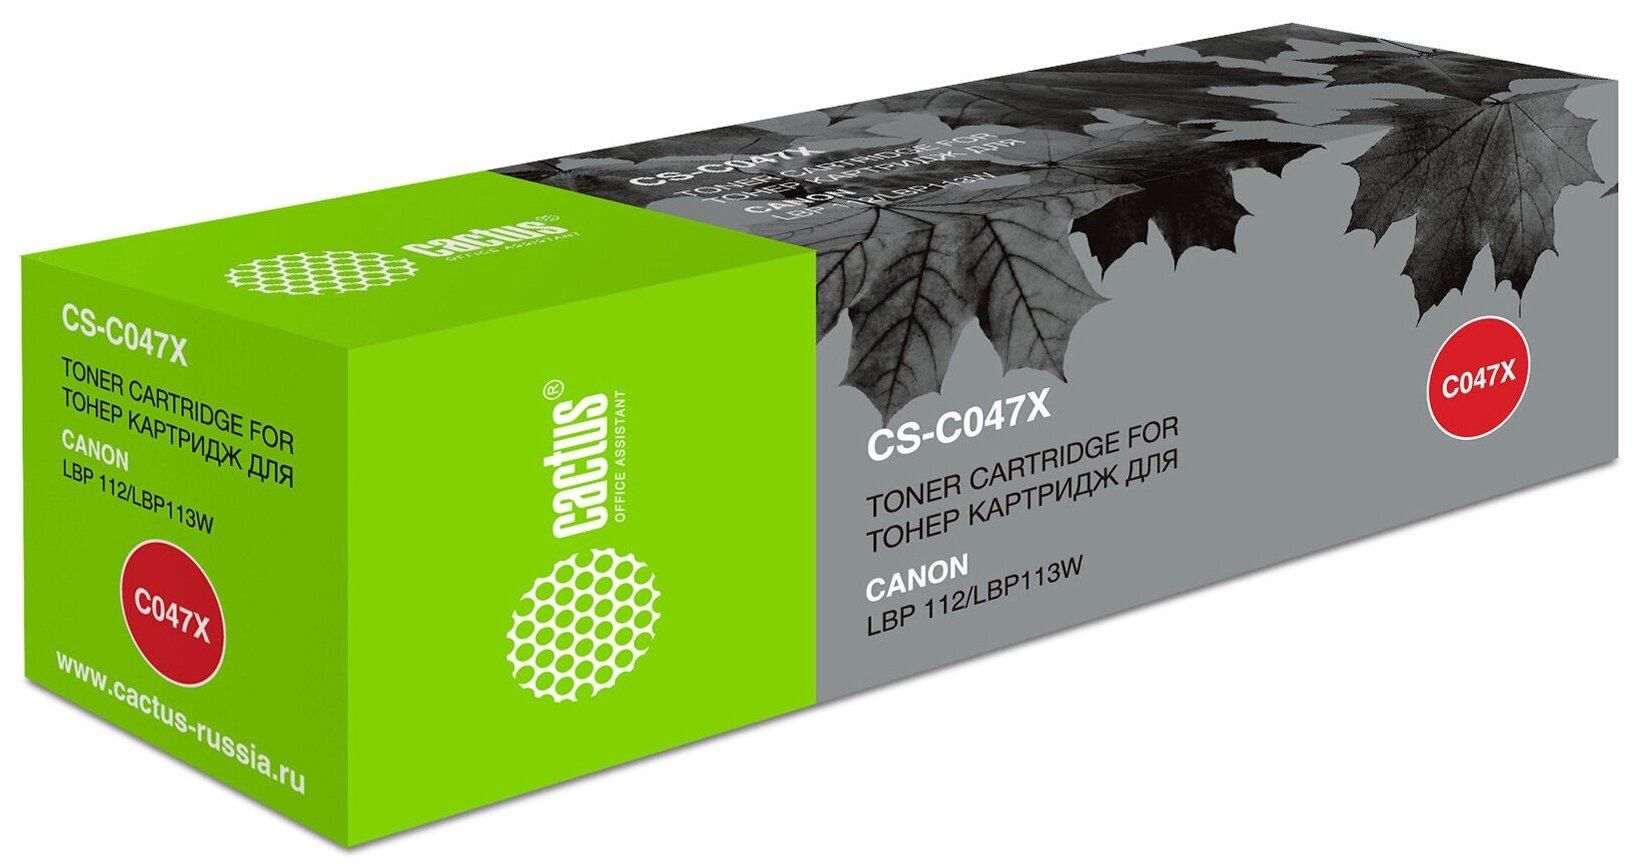 Картридж C-047X для лазерного принтера Кэнон, Canon i-SENSYS LBP112, LBP113W, MF112, MF113w